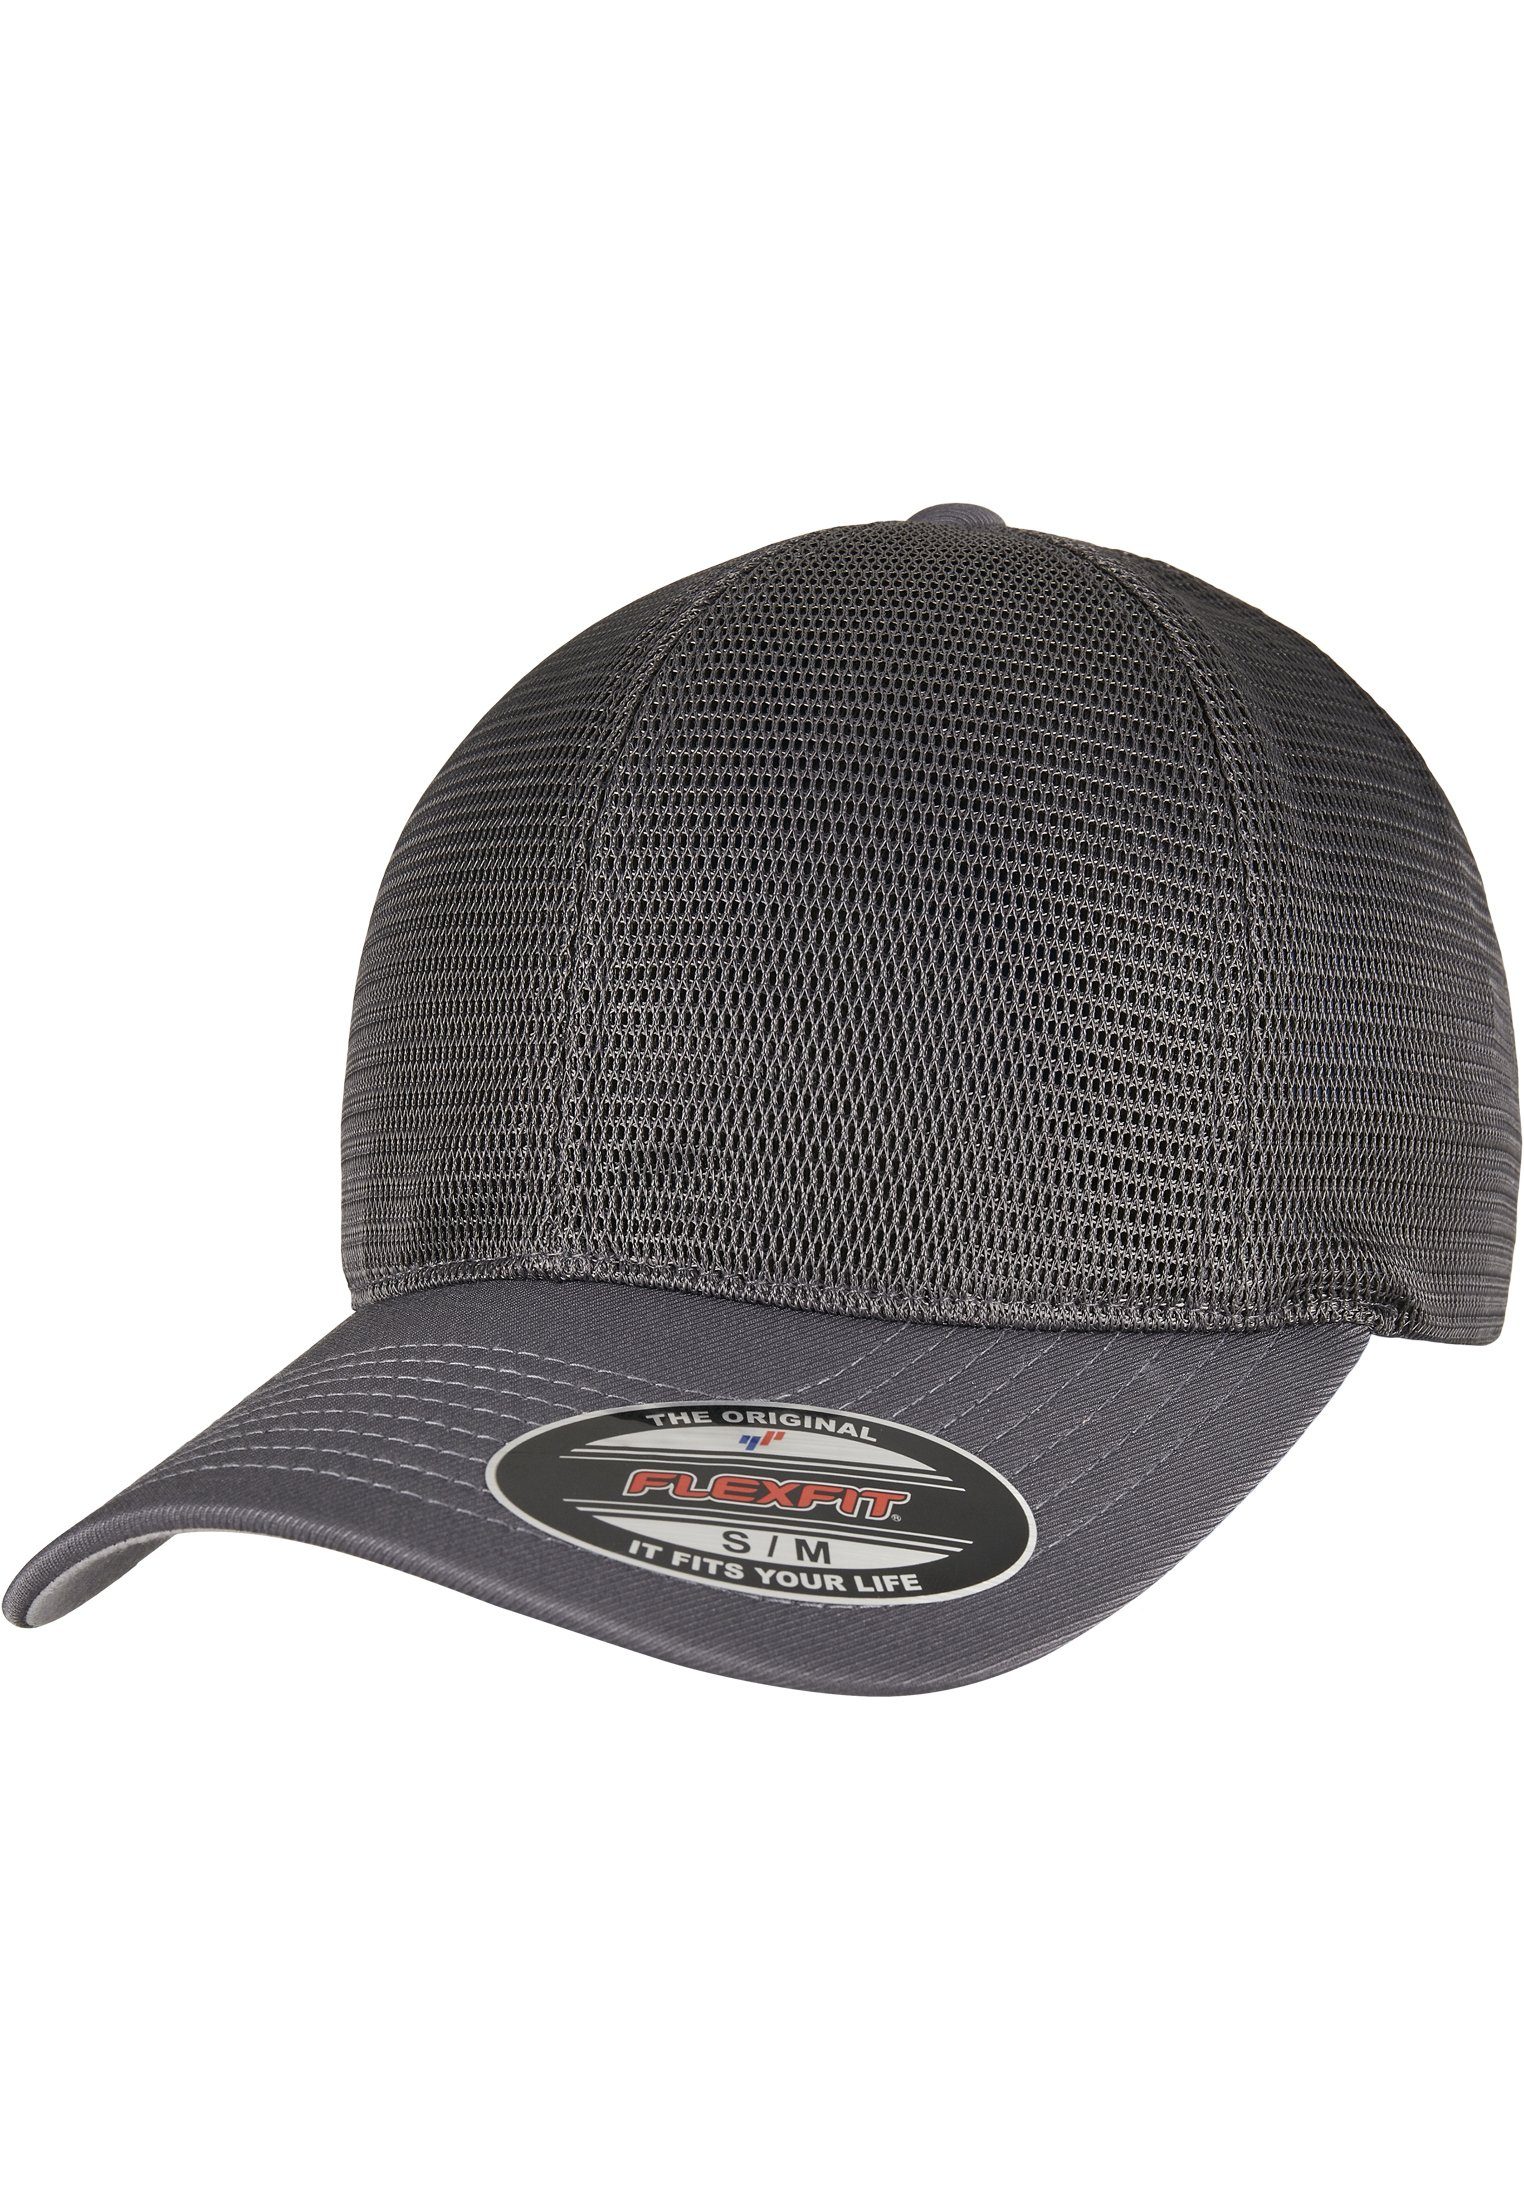 Flexfit Flex 360 Cap CAP charcoal FLEXFIT OMNIMESH Accessoires